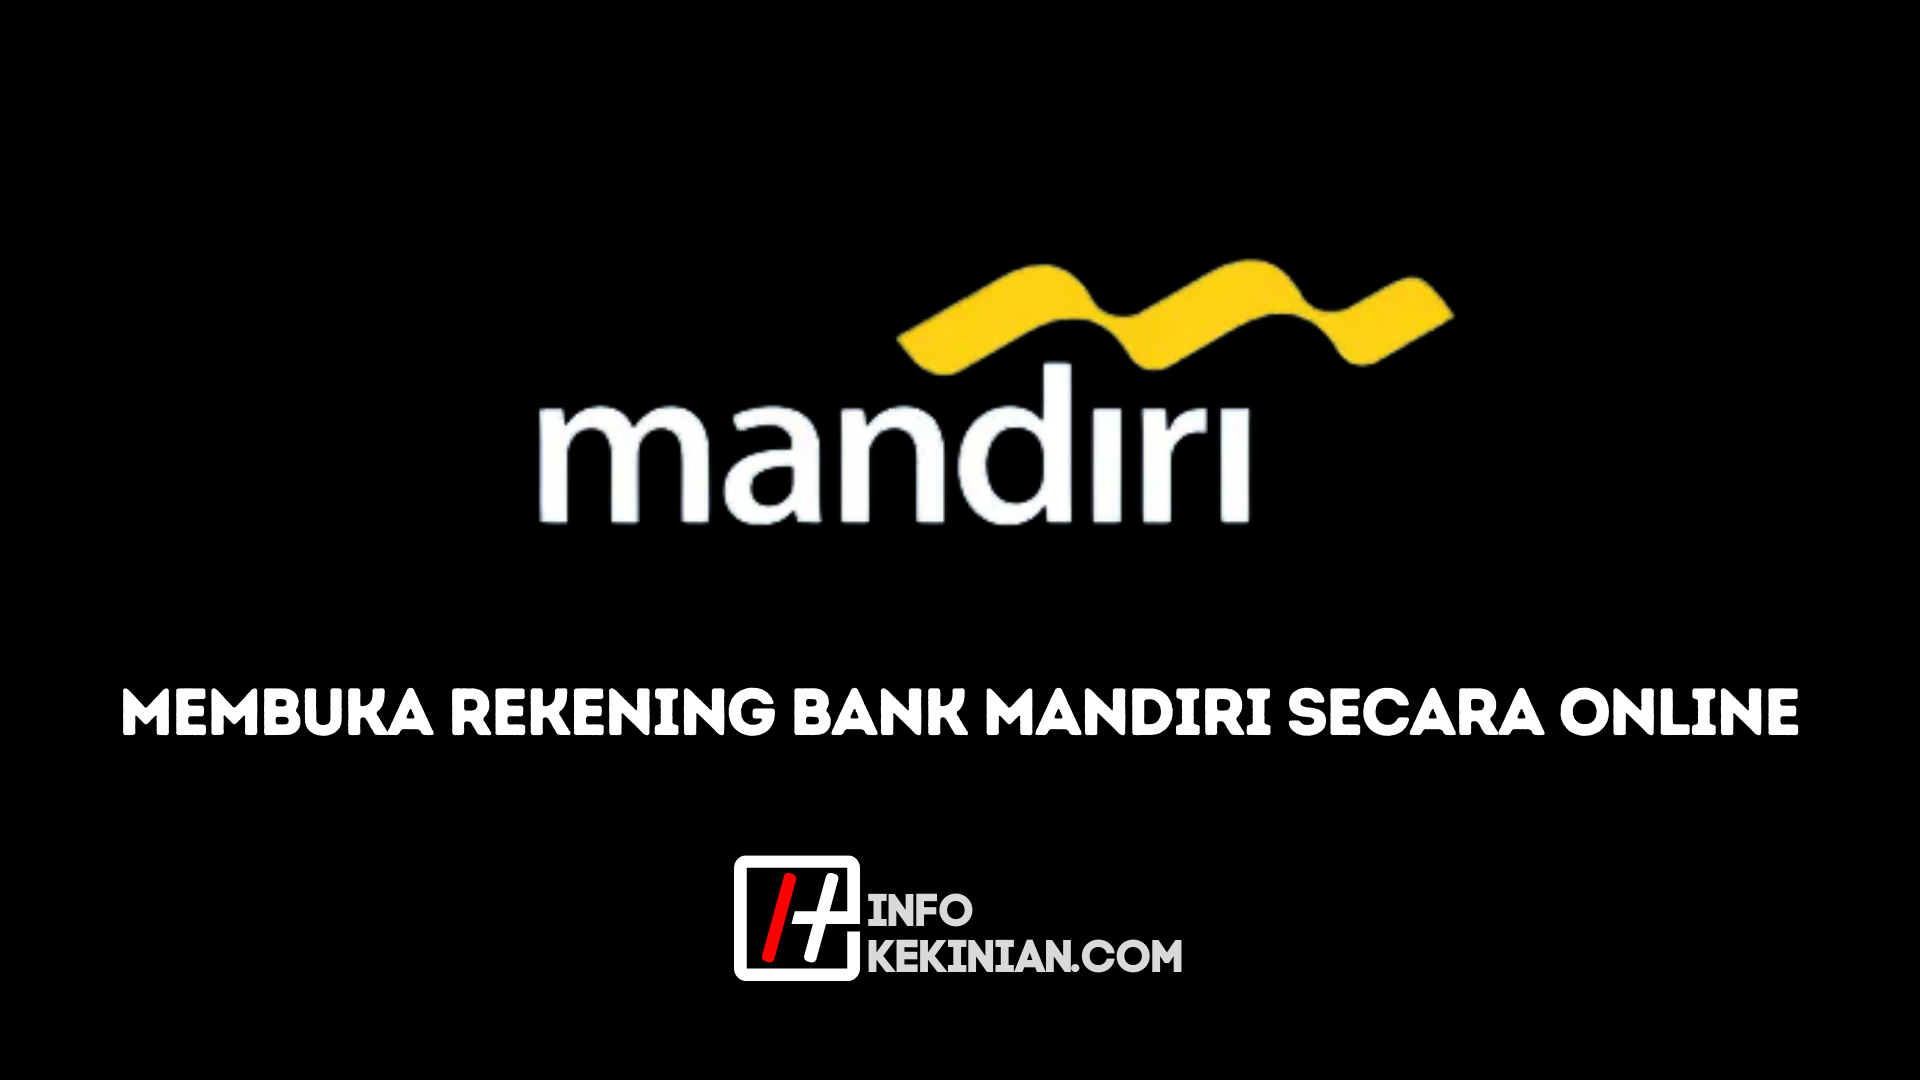 How to Open a Mandiri Bank Account 